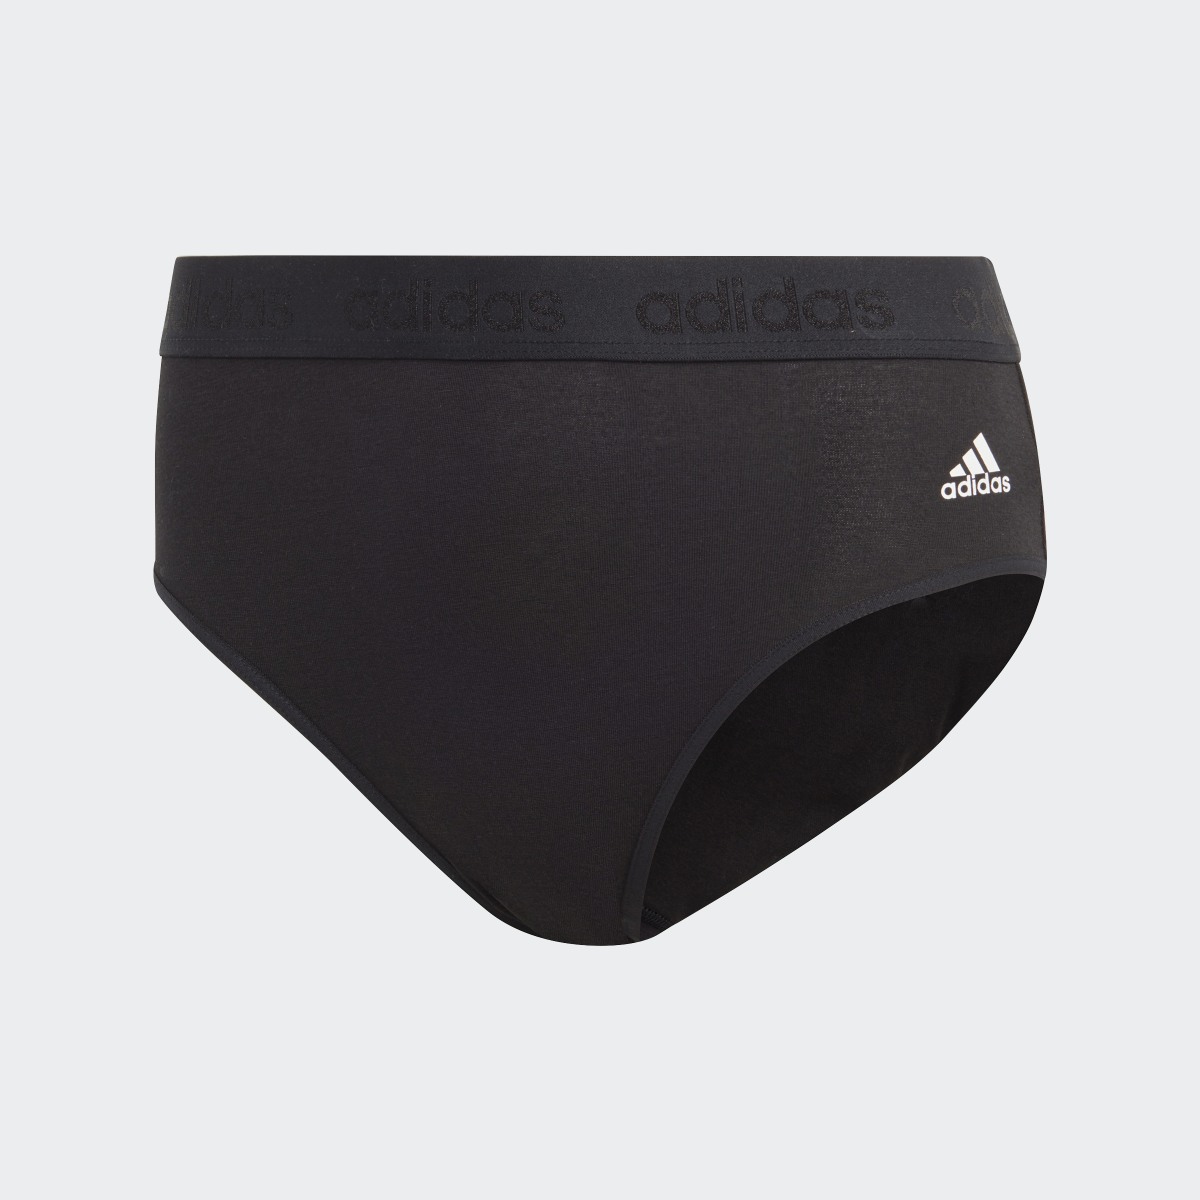 Adidas Active Comfort Flex Cotton Scoop Bikini Briefs 2 Pack. 4